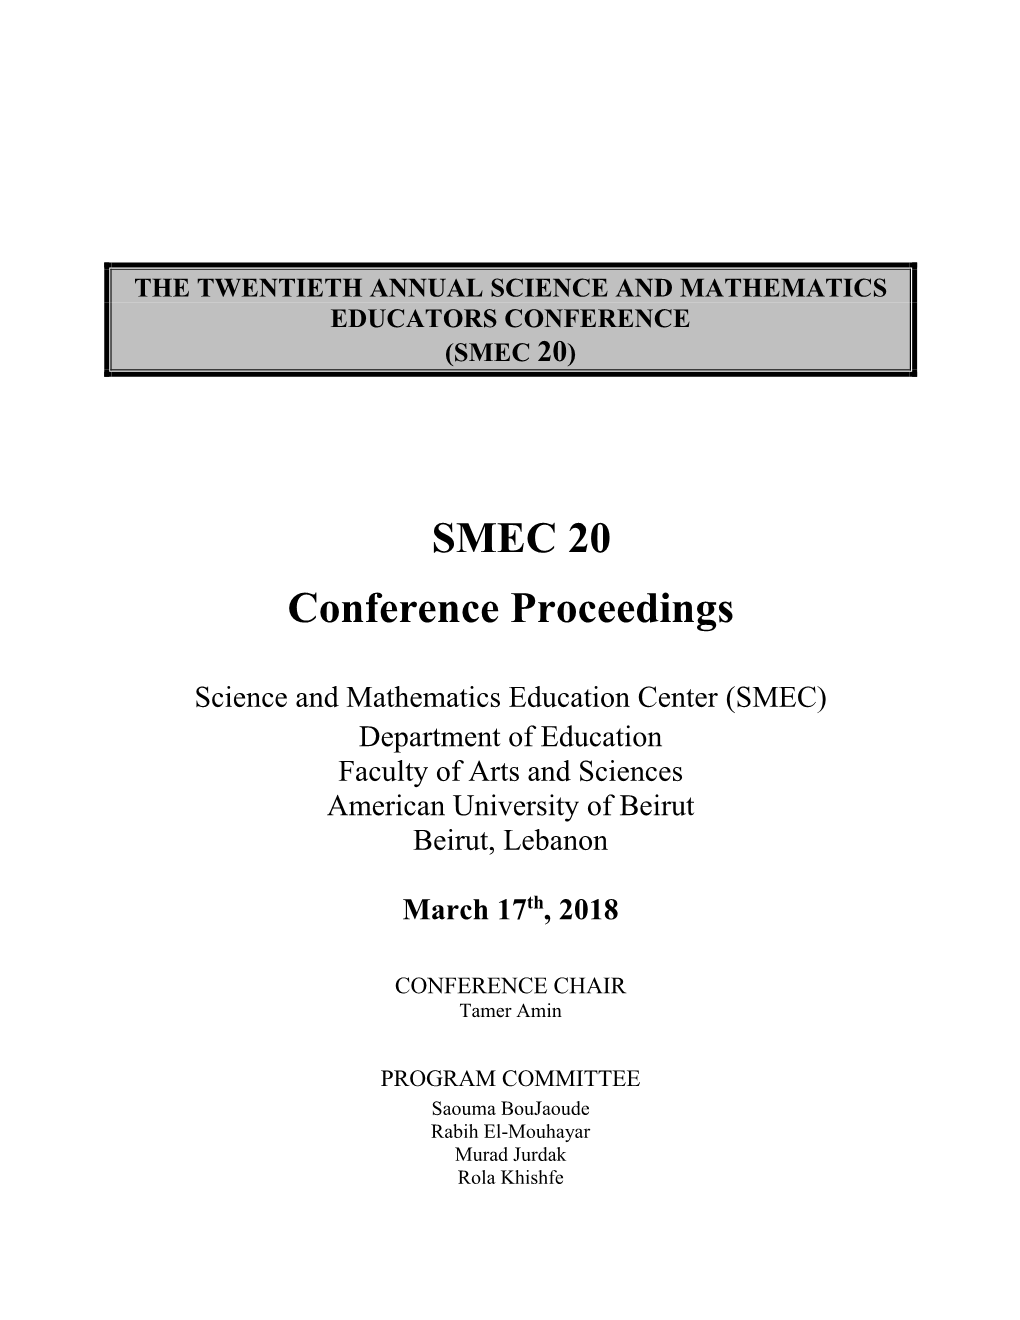 SMEC 20 Proceedings